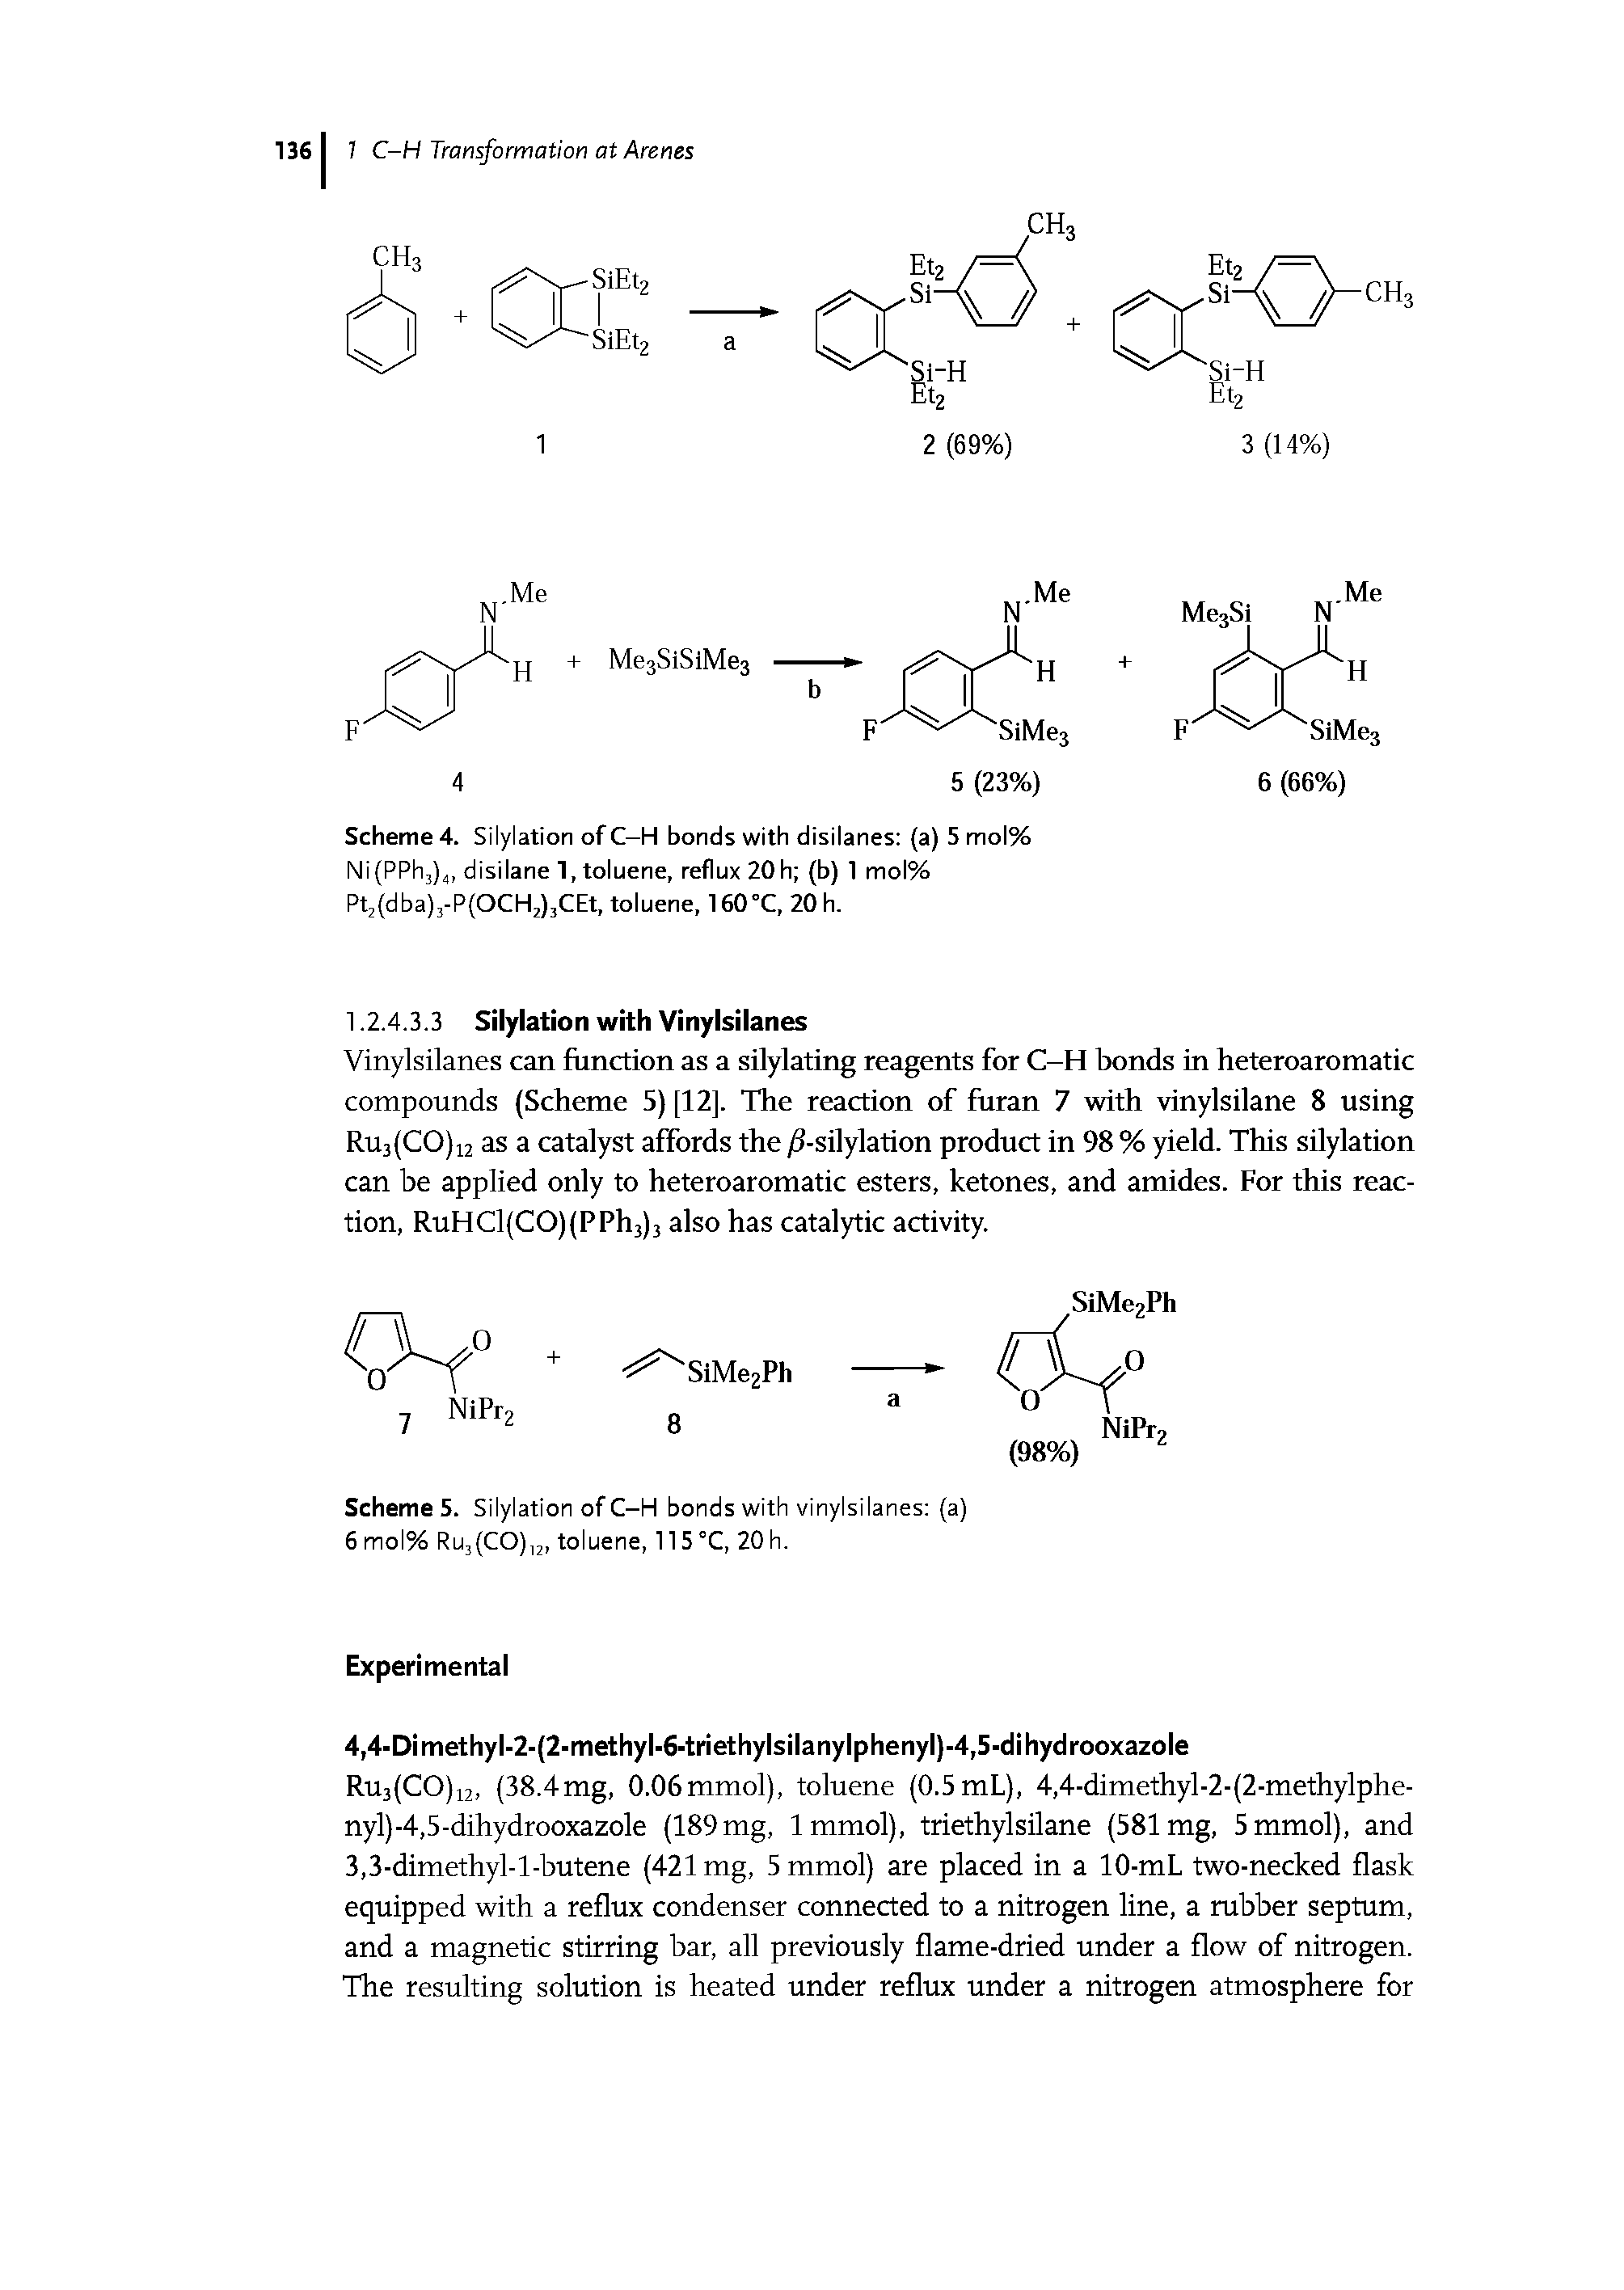 Scheme 5. Silylation of C-H bonds with vinylsilanes (a) 6 mol% Ru3(CO)12, toluene, 115 °C, 20 h.